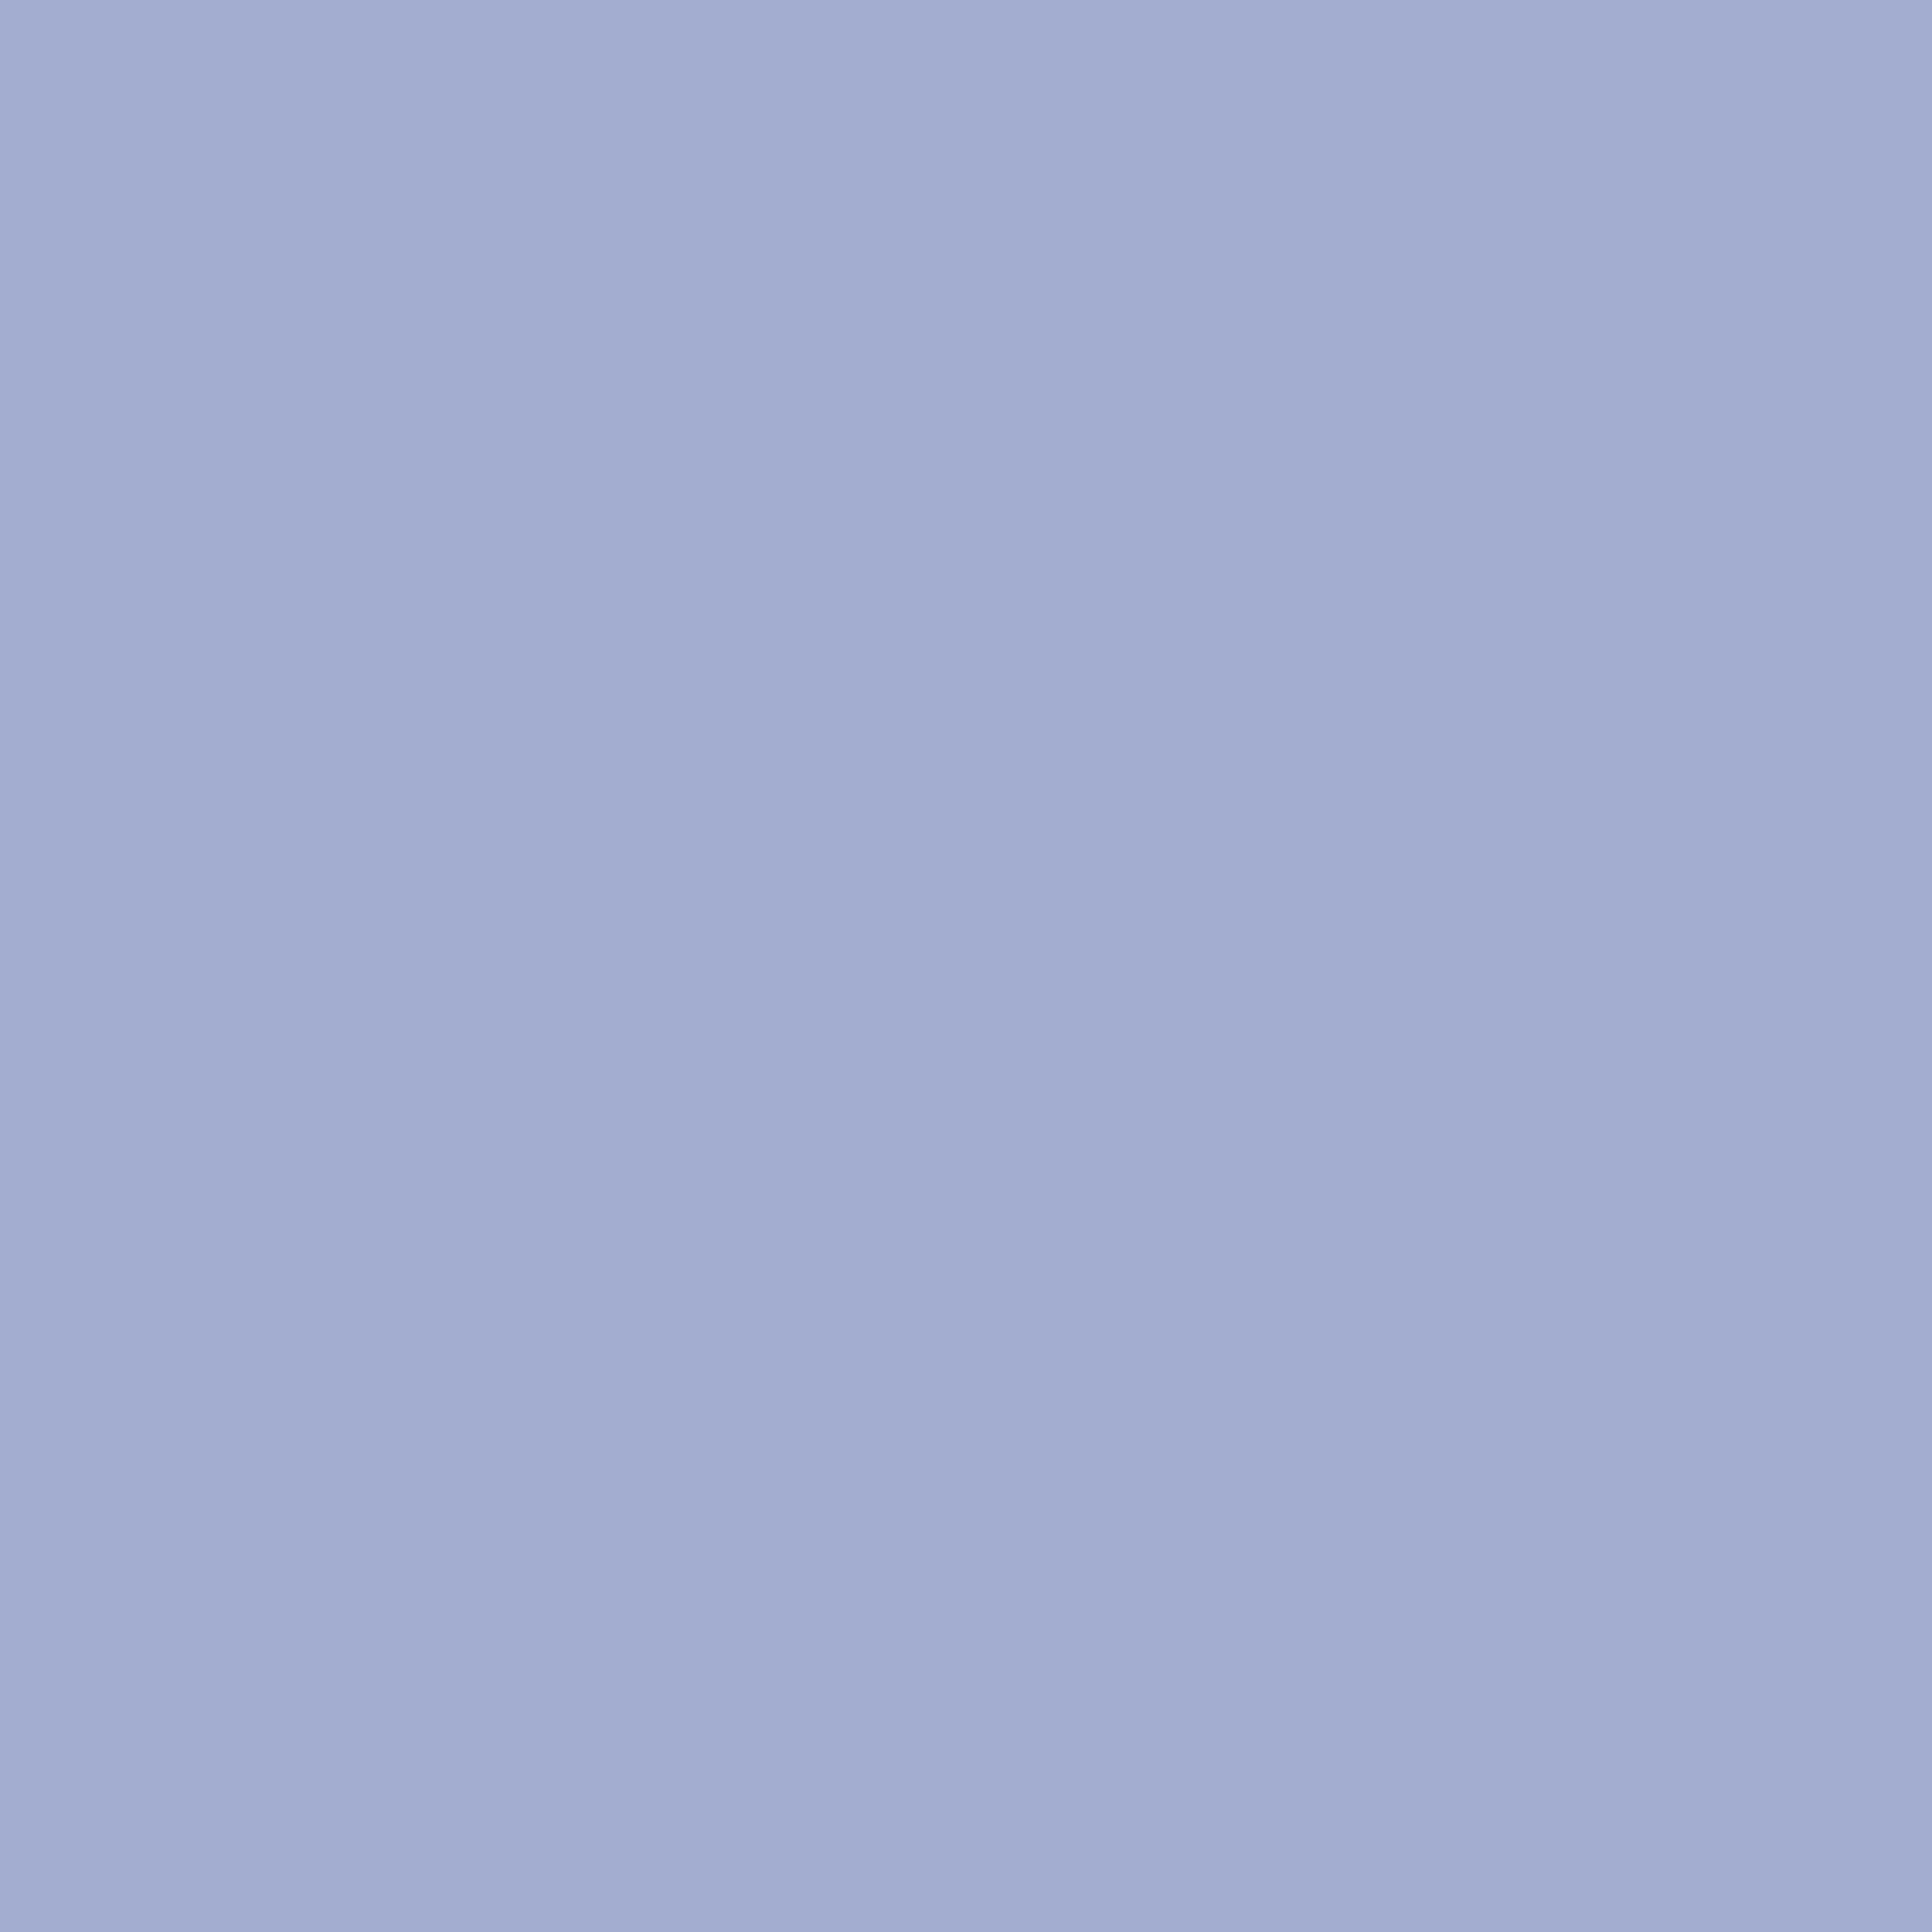 2048x2048 Wild Blue Yonder Solid Color Background